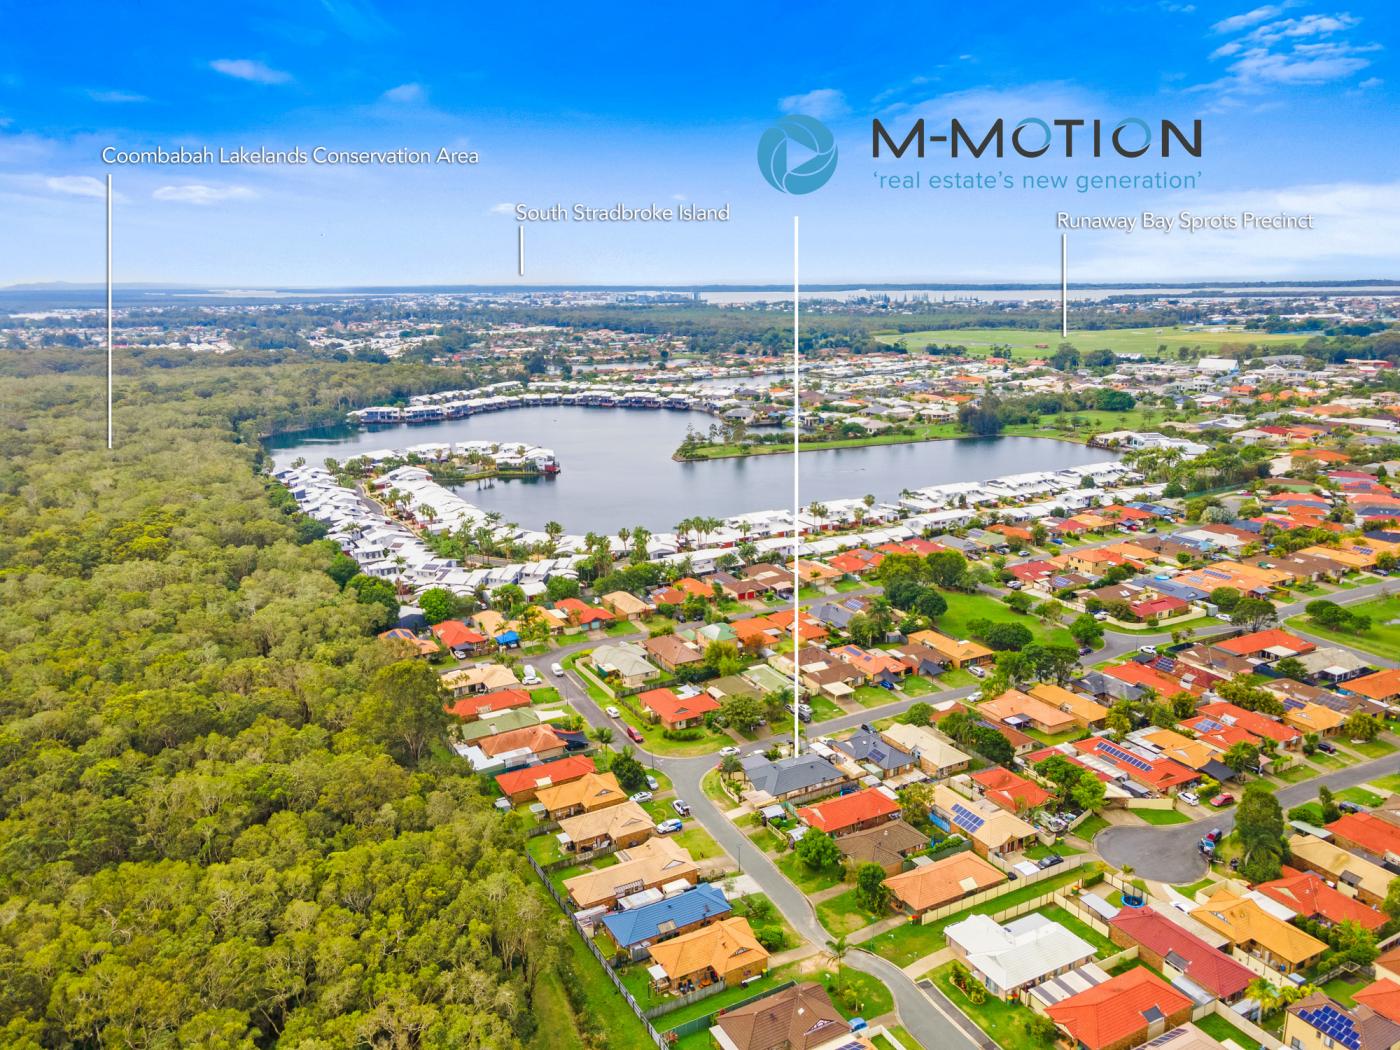 M-Motion Real Estate Agency, 35 Leonardo Circuit, Coombabah, Qld, 4216, Michael Mahon, Lauren Mahon Best Real Estate Agent Gold Coast